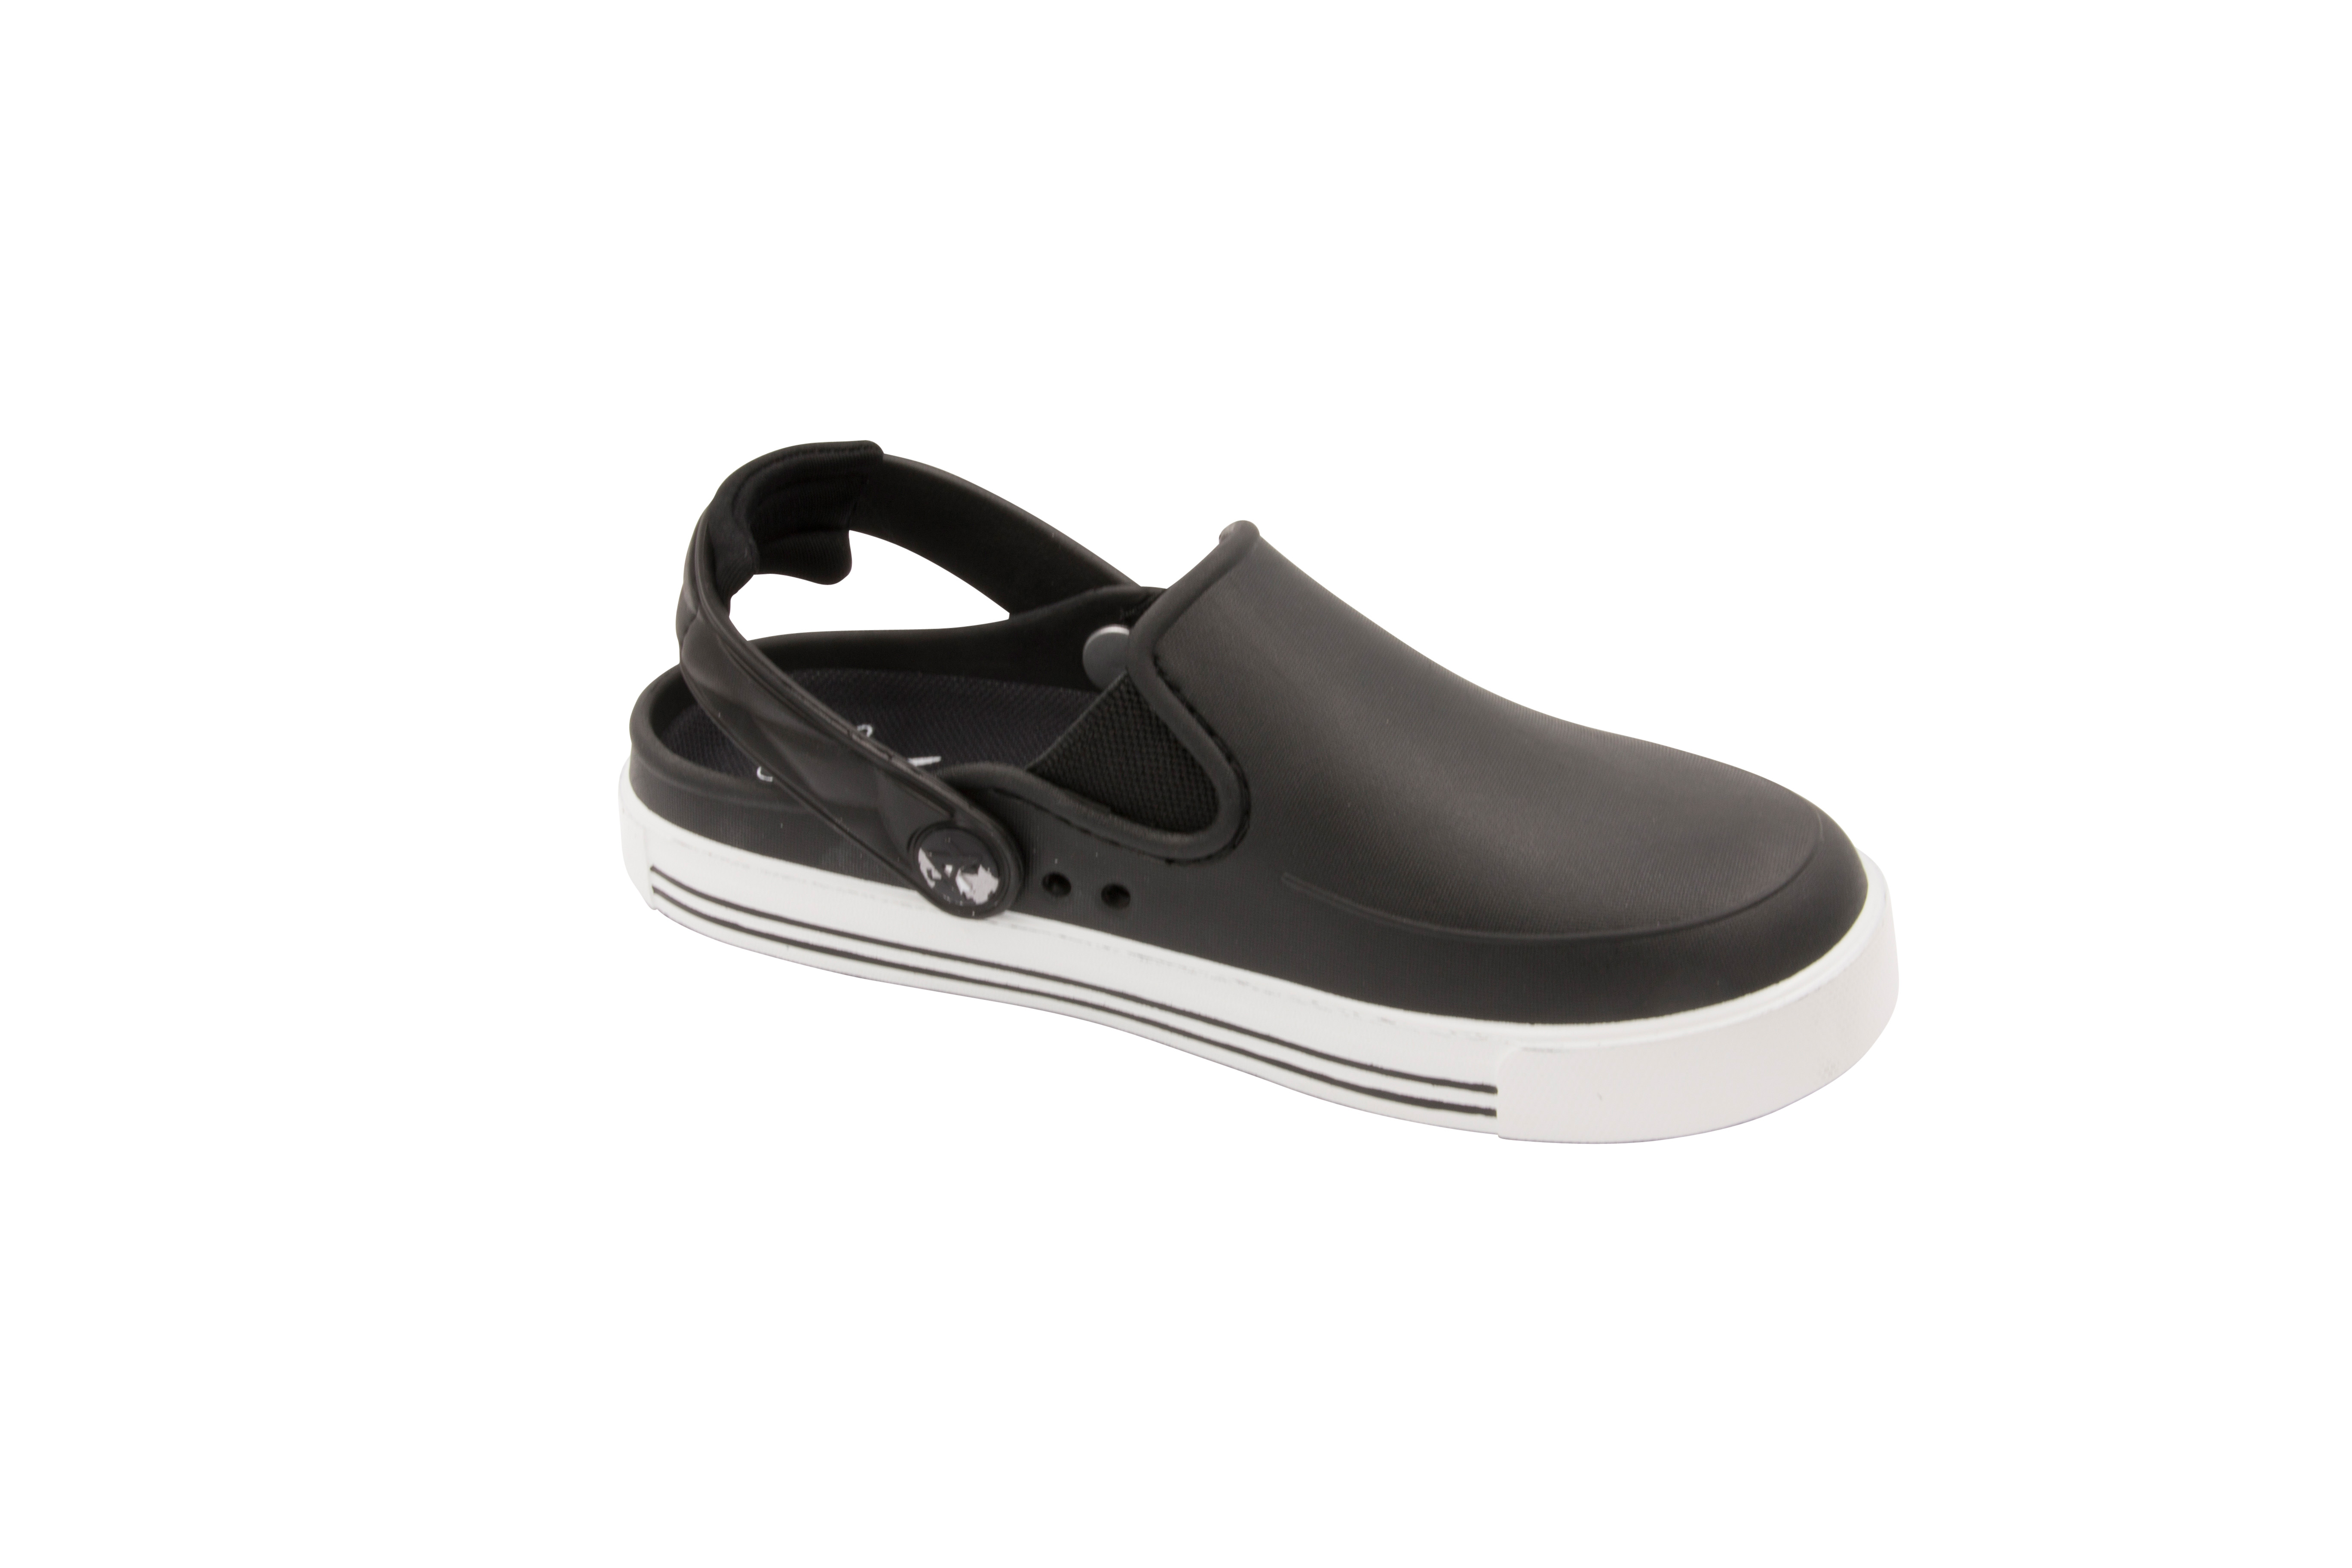 AnyWear Women's Range Slide in Shoe with Adjustable heel Strap